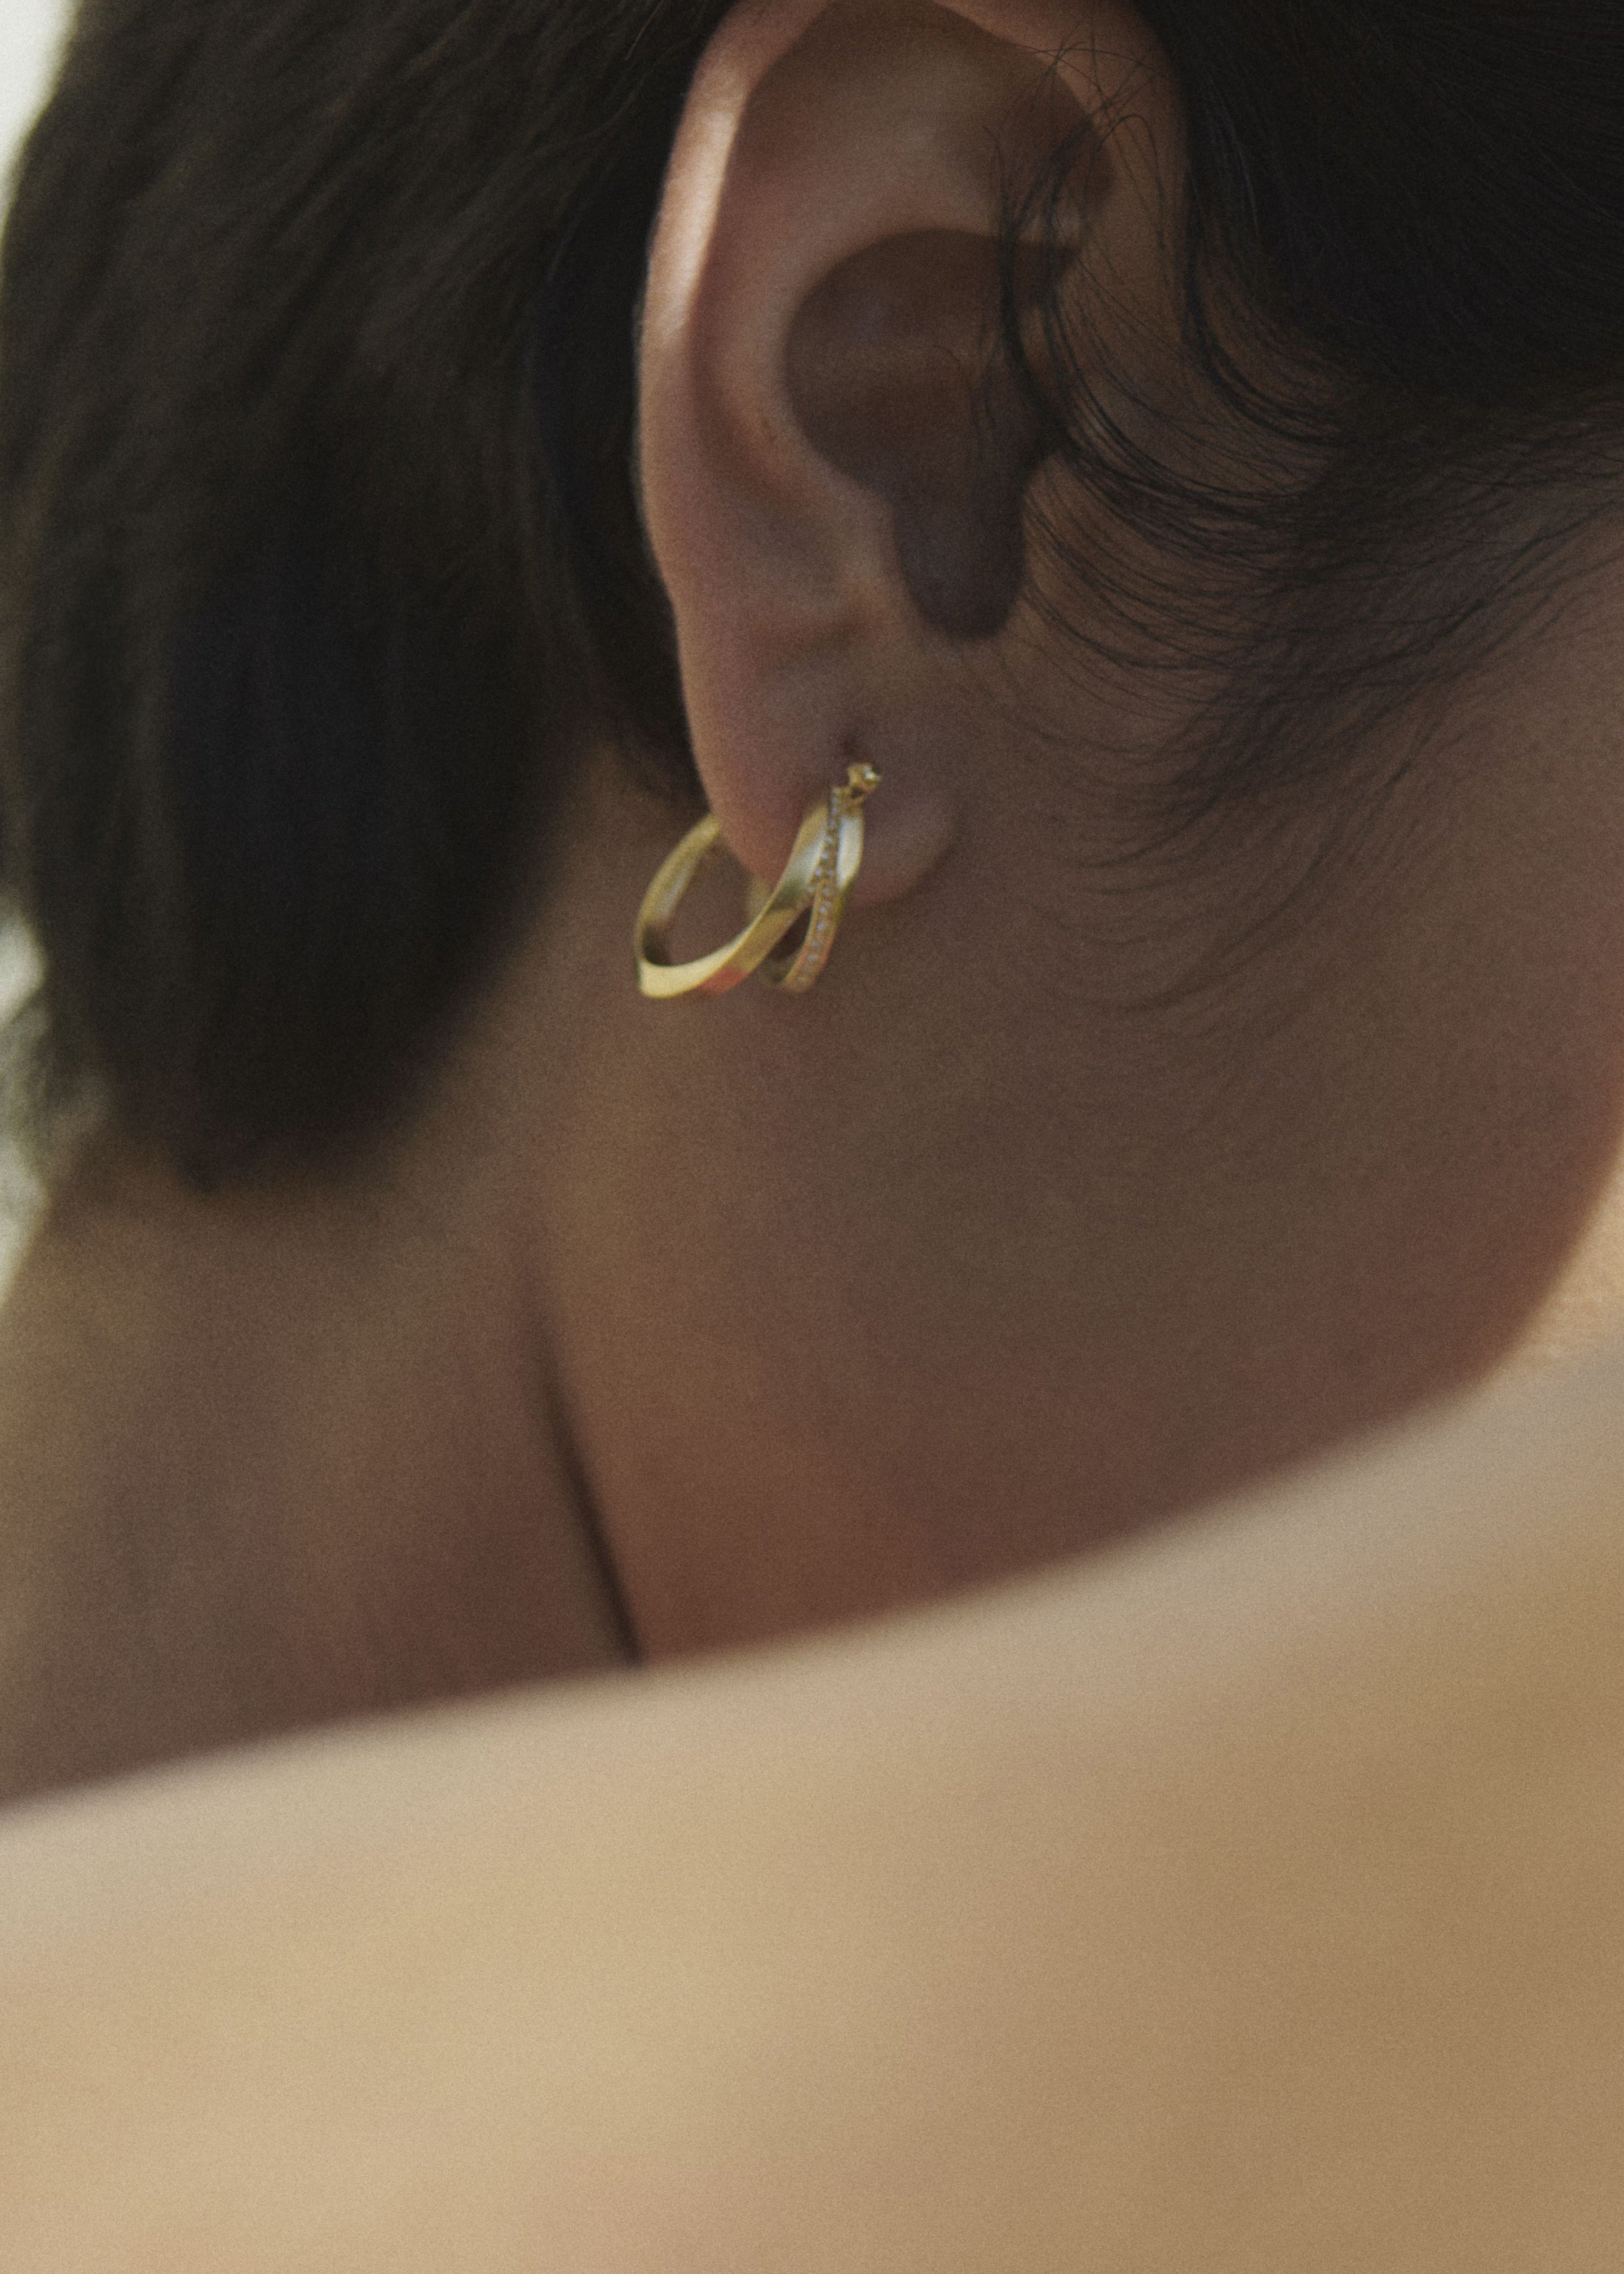 Completedworks Suburbs Earrings - Gold Vermeil - 1